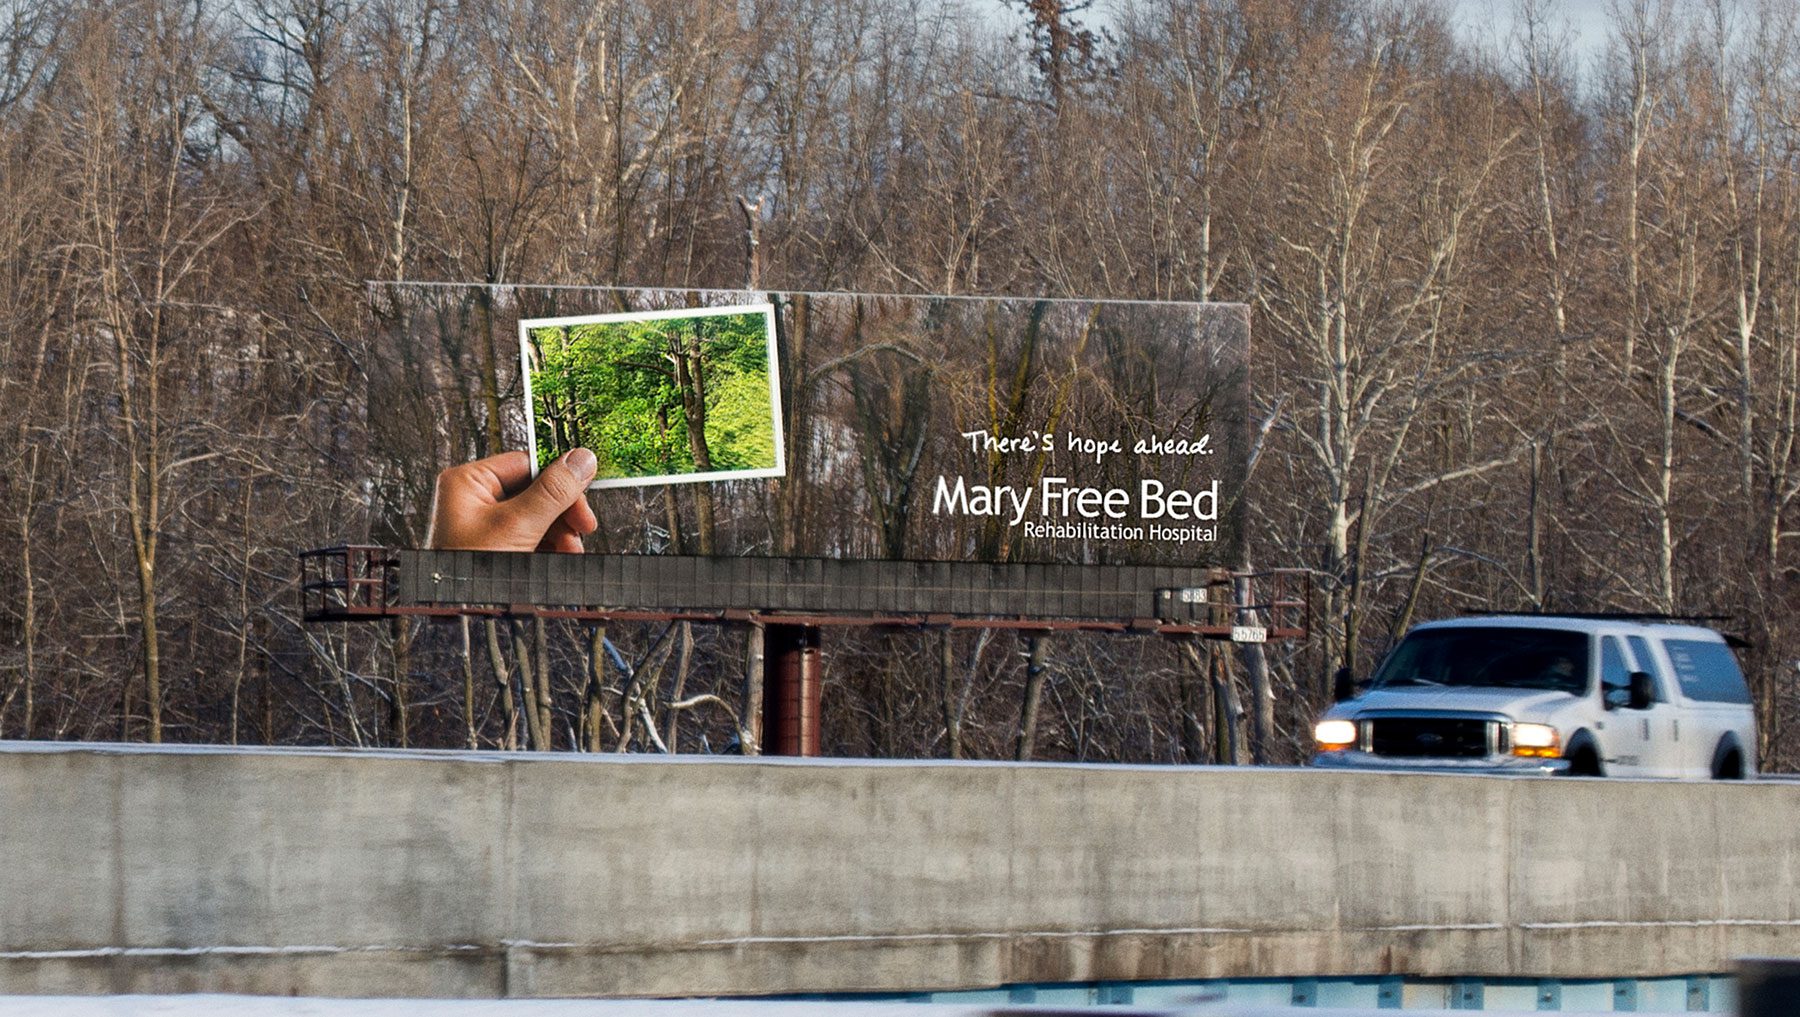 Billboards Use Bleak Winter Landscape to Communicate Hope